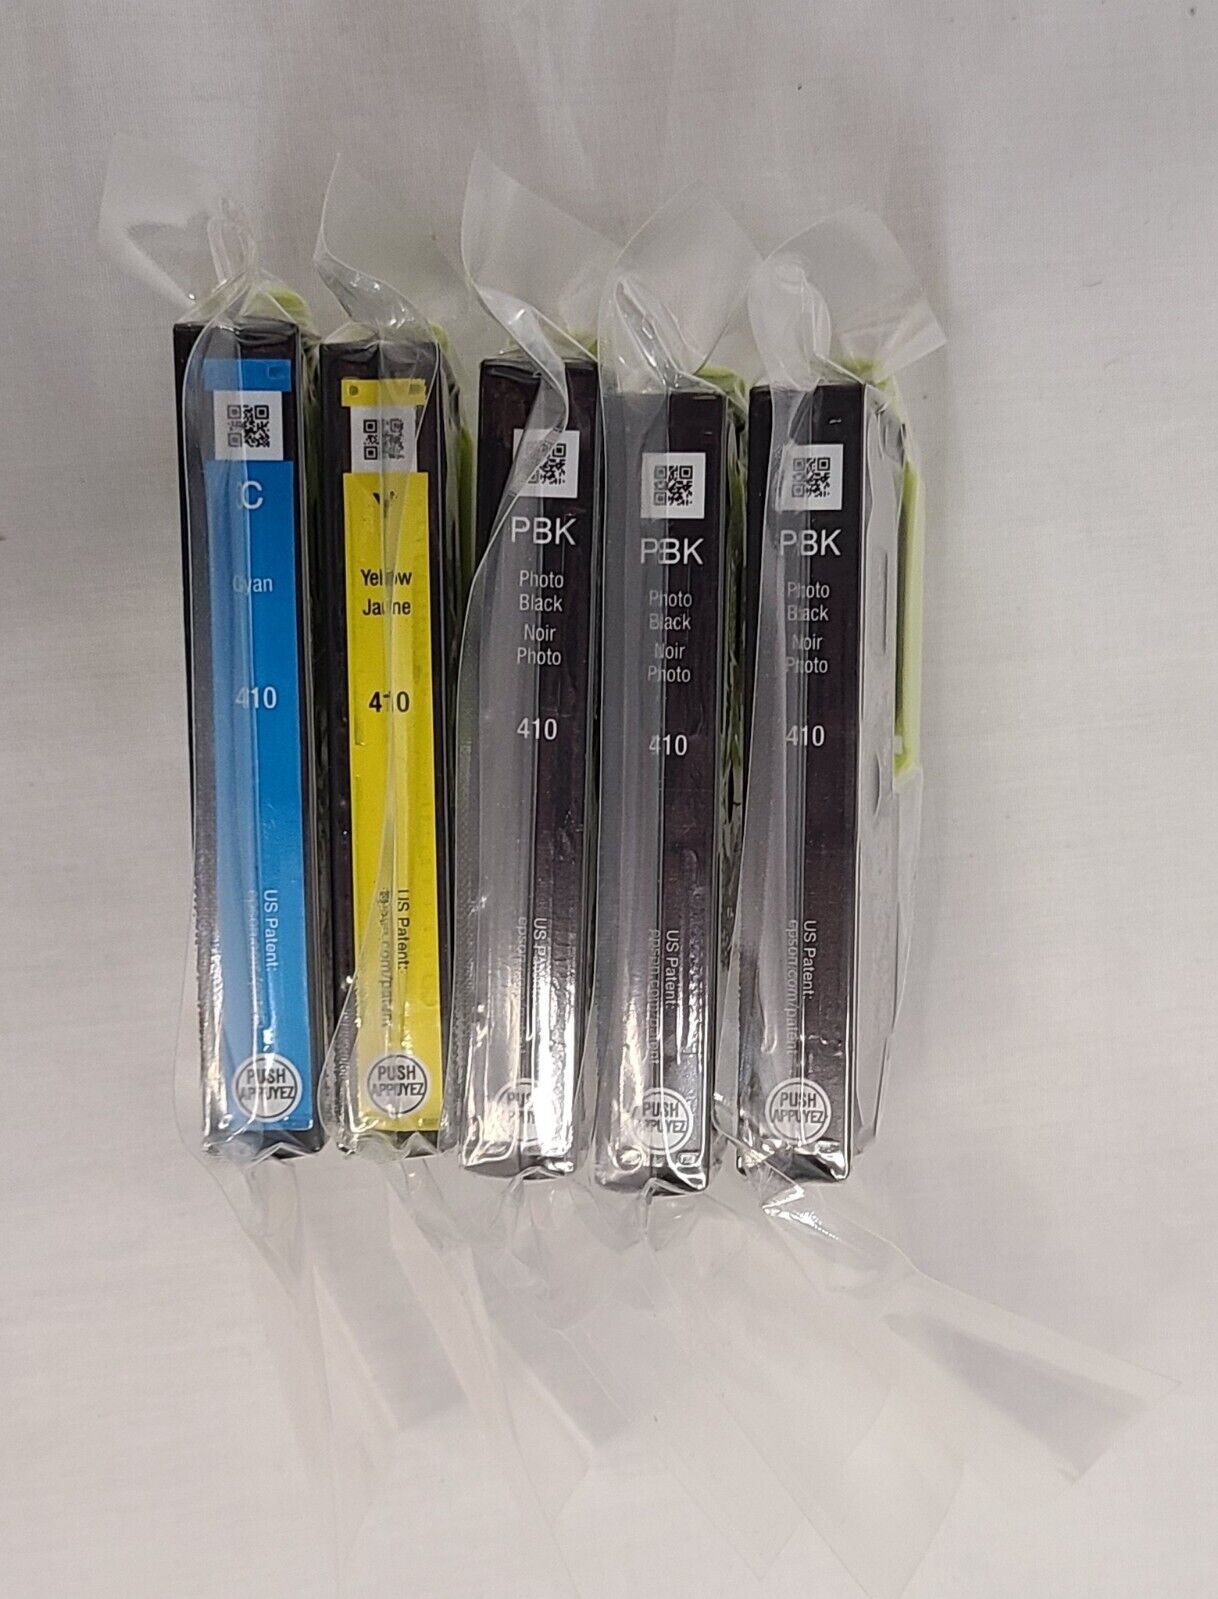 EPSON 410 Ink Cartridge Lot 3x Black - 1x Cyan - 1x Yellow - New Genuine Sealed